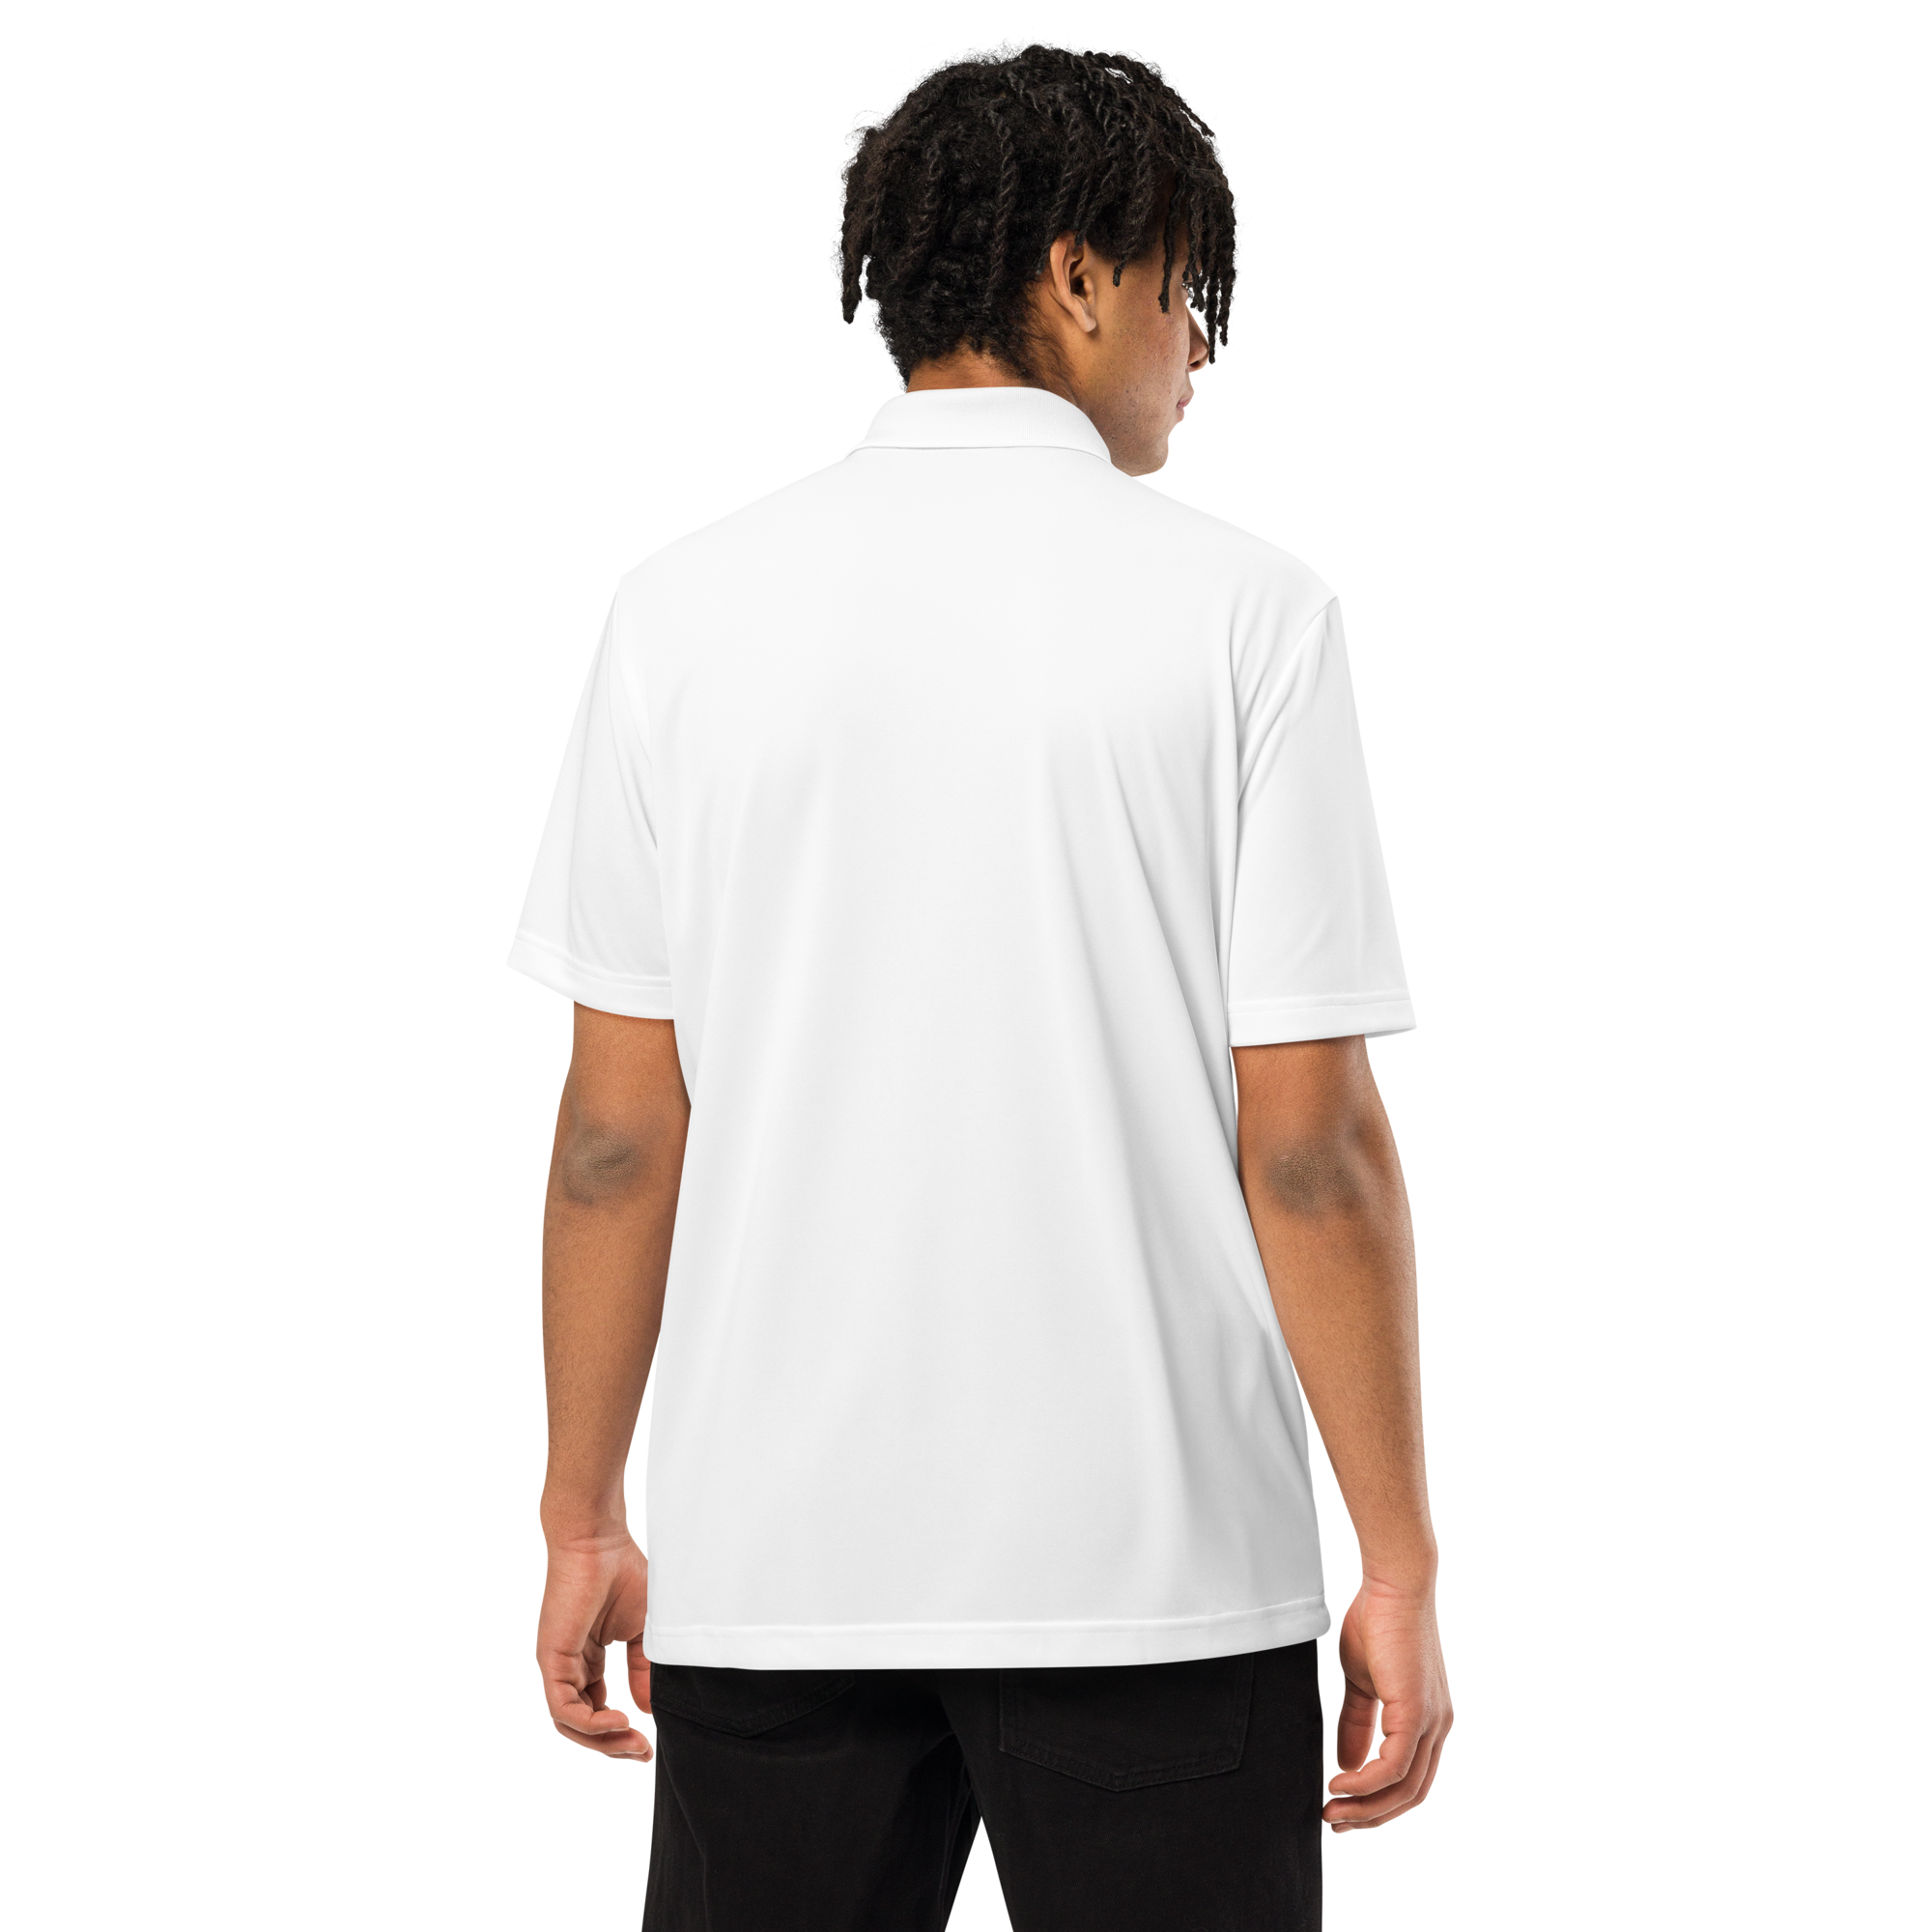 Adidas x Balearica Pavonina Polo Shirt V1 - White